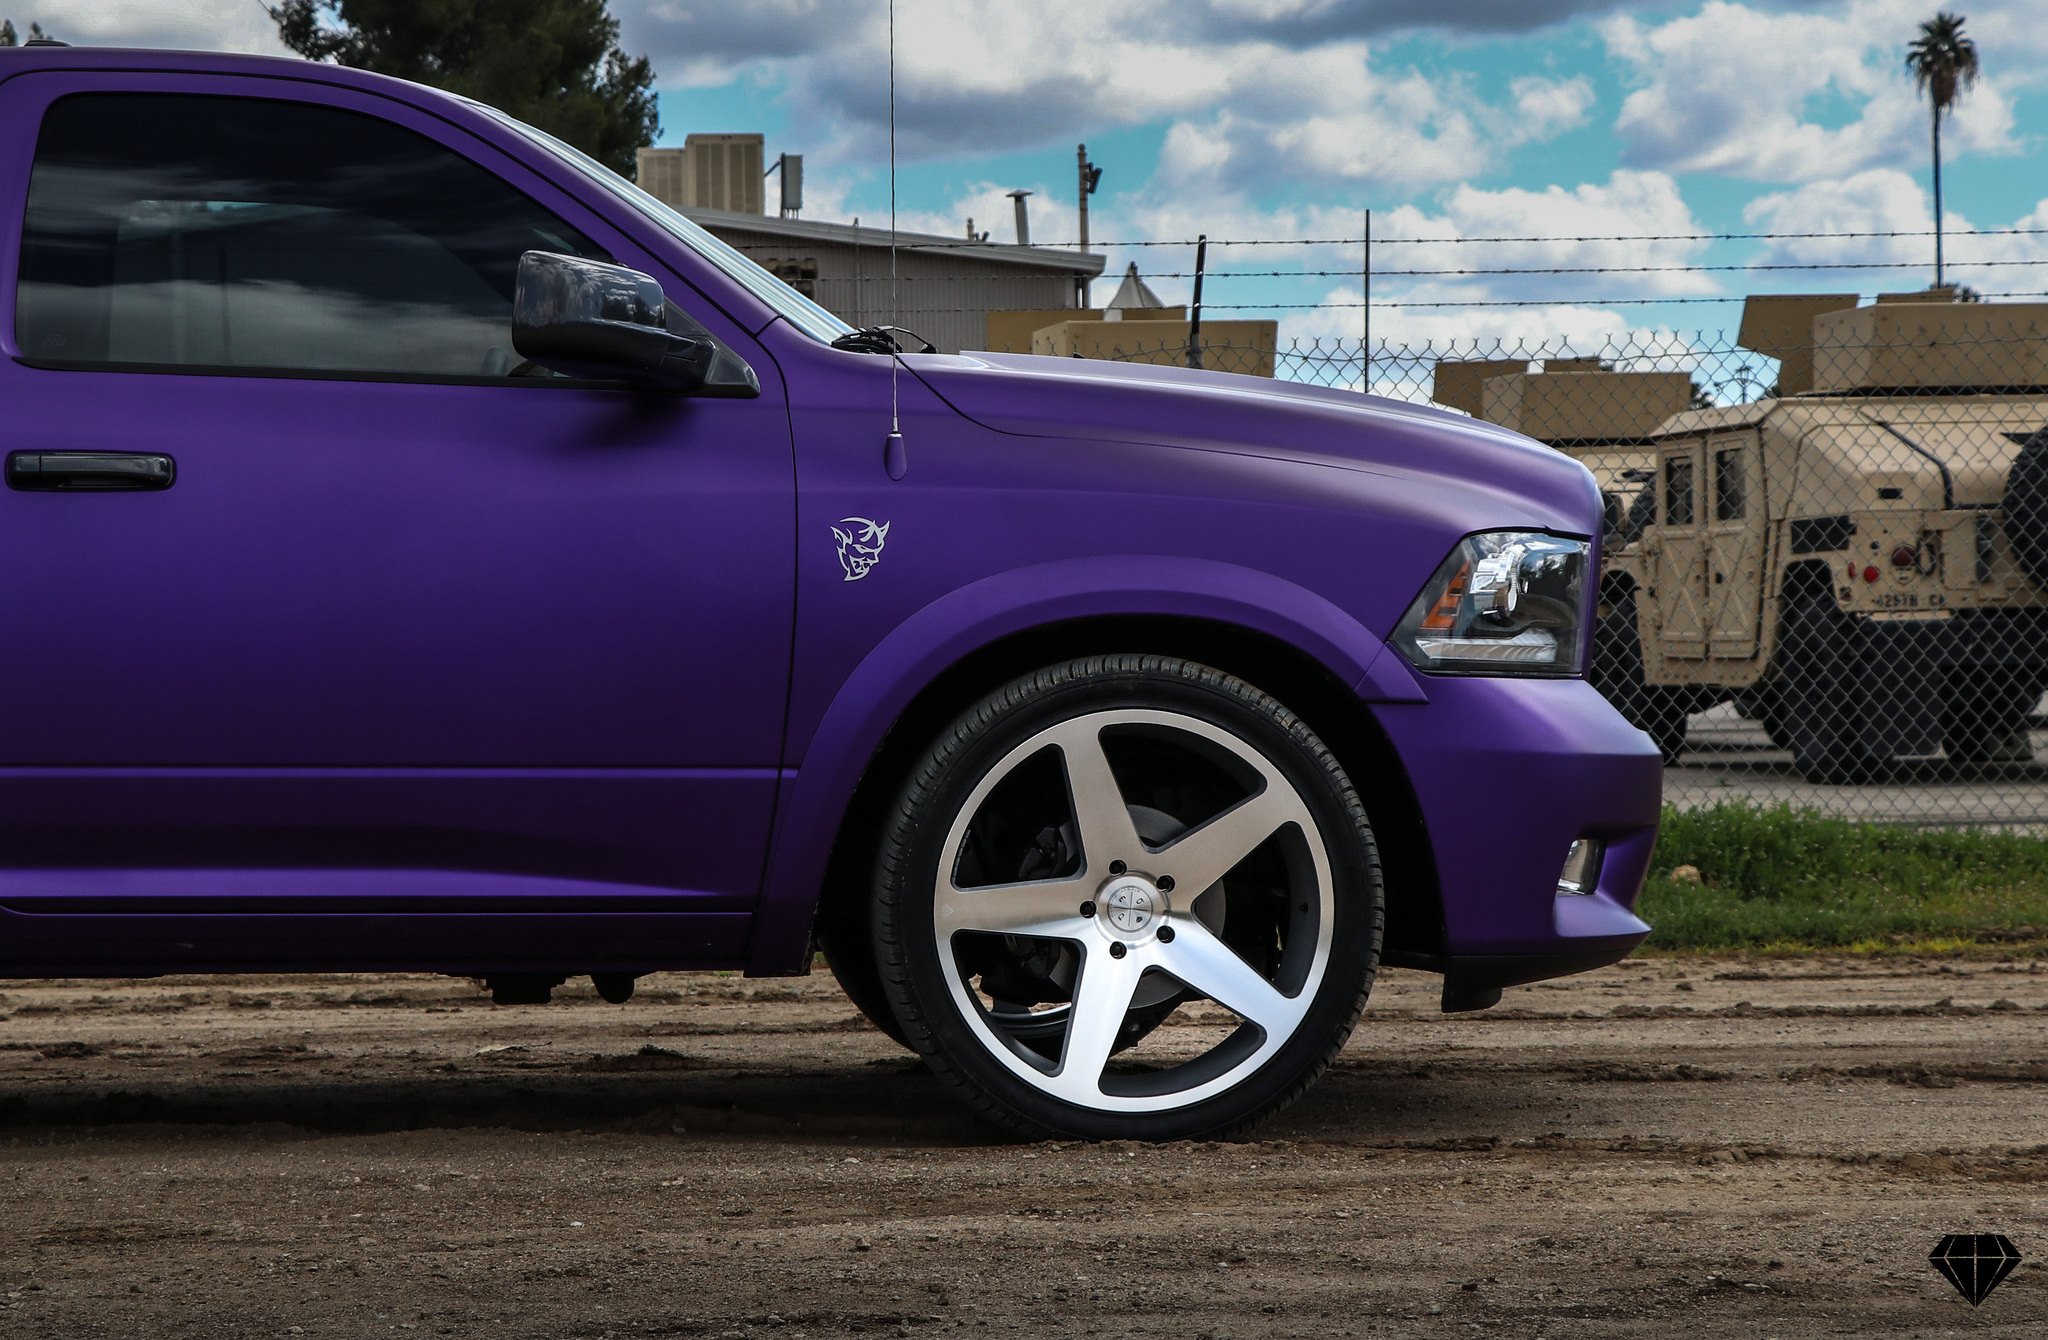 Silver Blaque Diamond Rims on Matte Purple Dodge Ram - Photo by Blaque Diamond Wheels